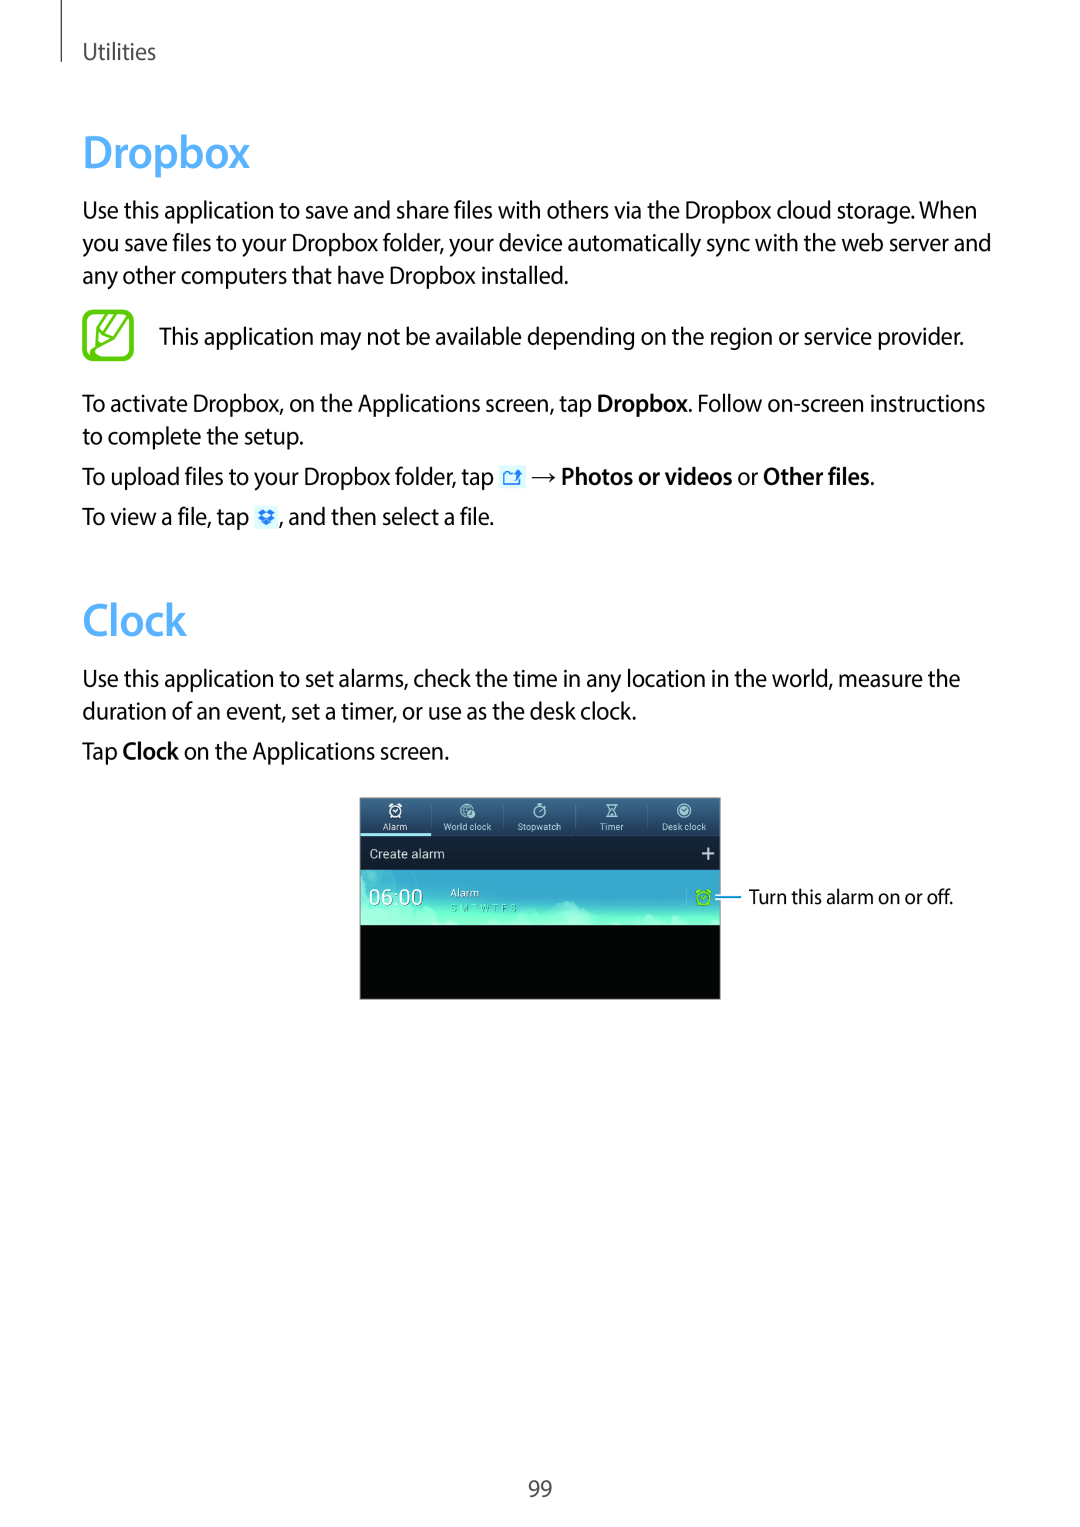 Samsung EK-GC100 user manual Dropbox, Clock, Utilities 